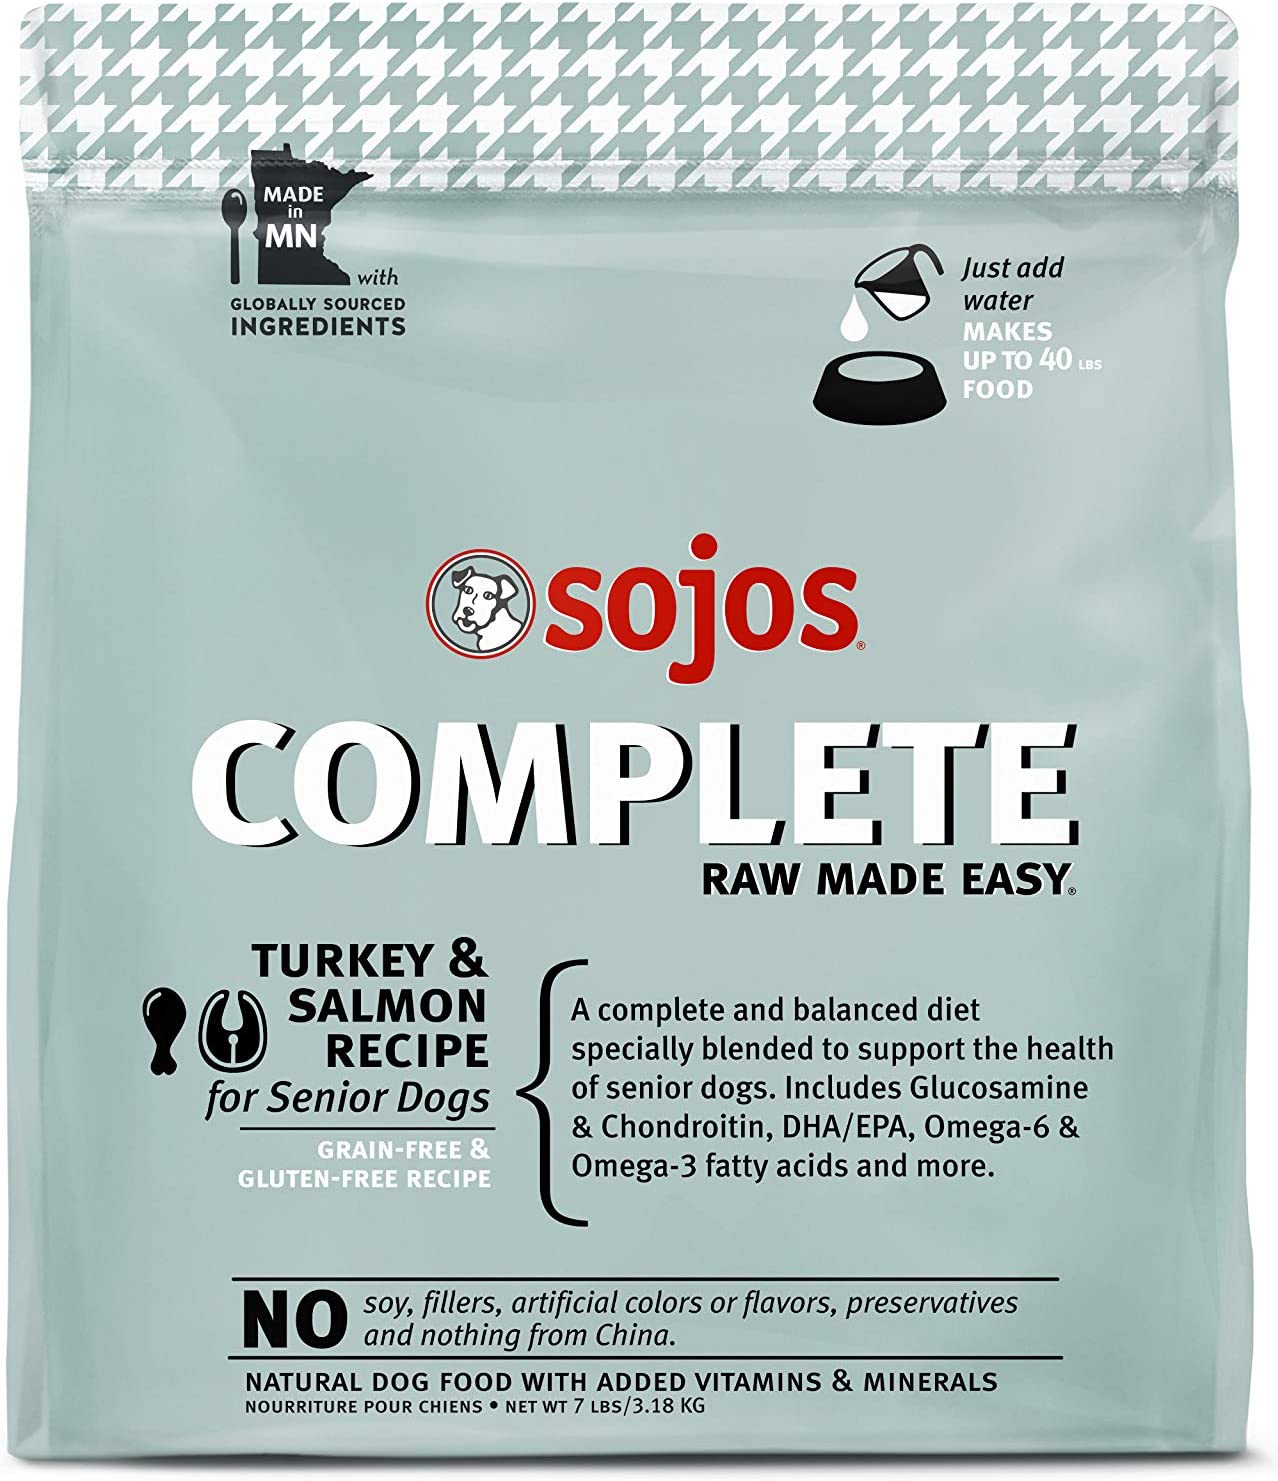 SOJOS Complete Turkey & Salmon Recipe Senior Grain-Free Freeze-Dried Raw Dog Food